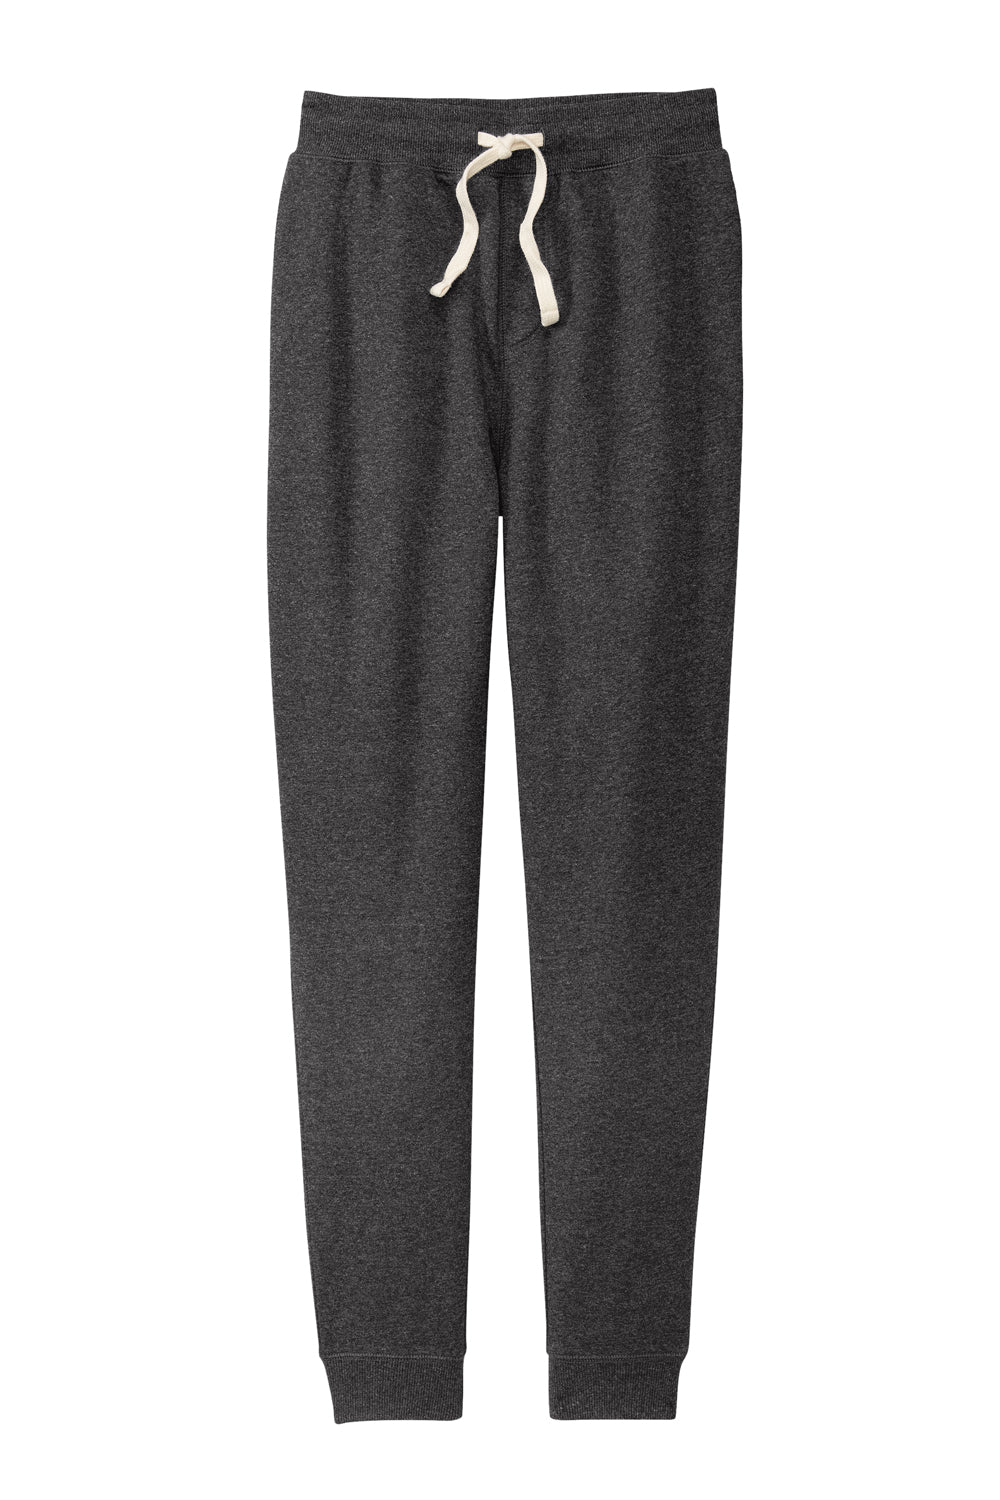 District DT8107 Mens Re-Fleece Jogger Sweatpants w/ Pockets Heather Charcoal Grey Flat Front